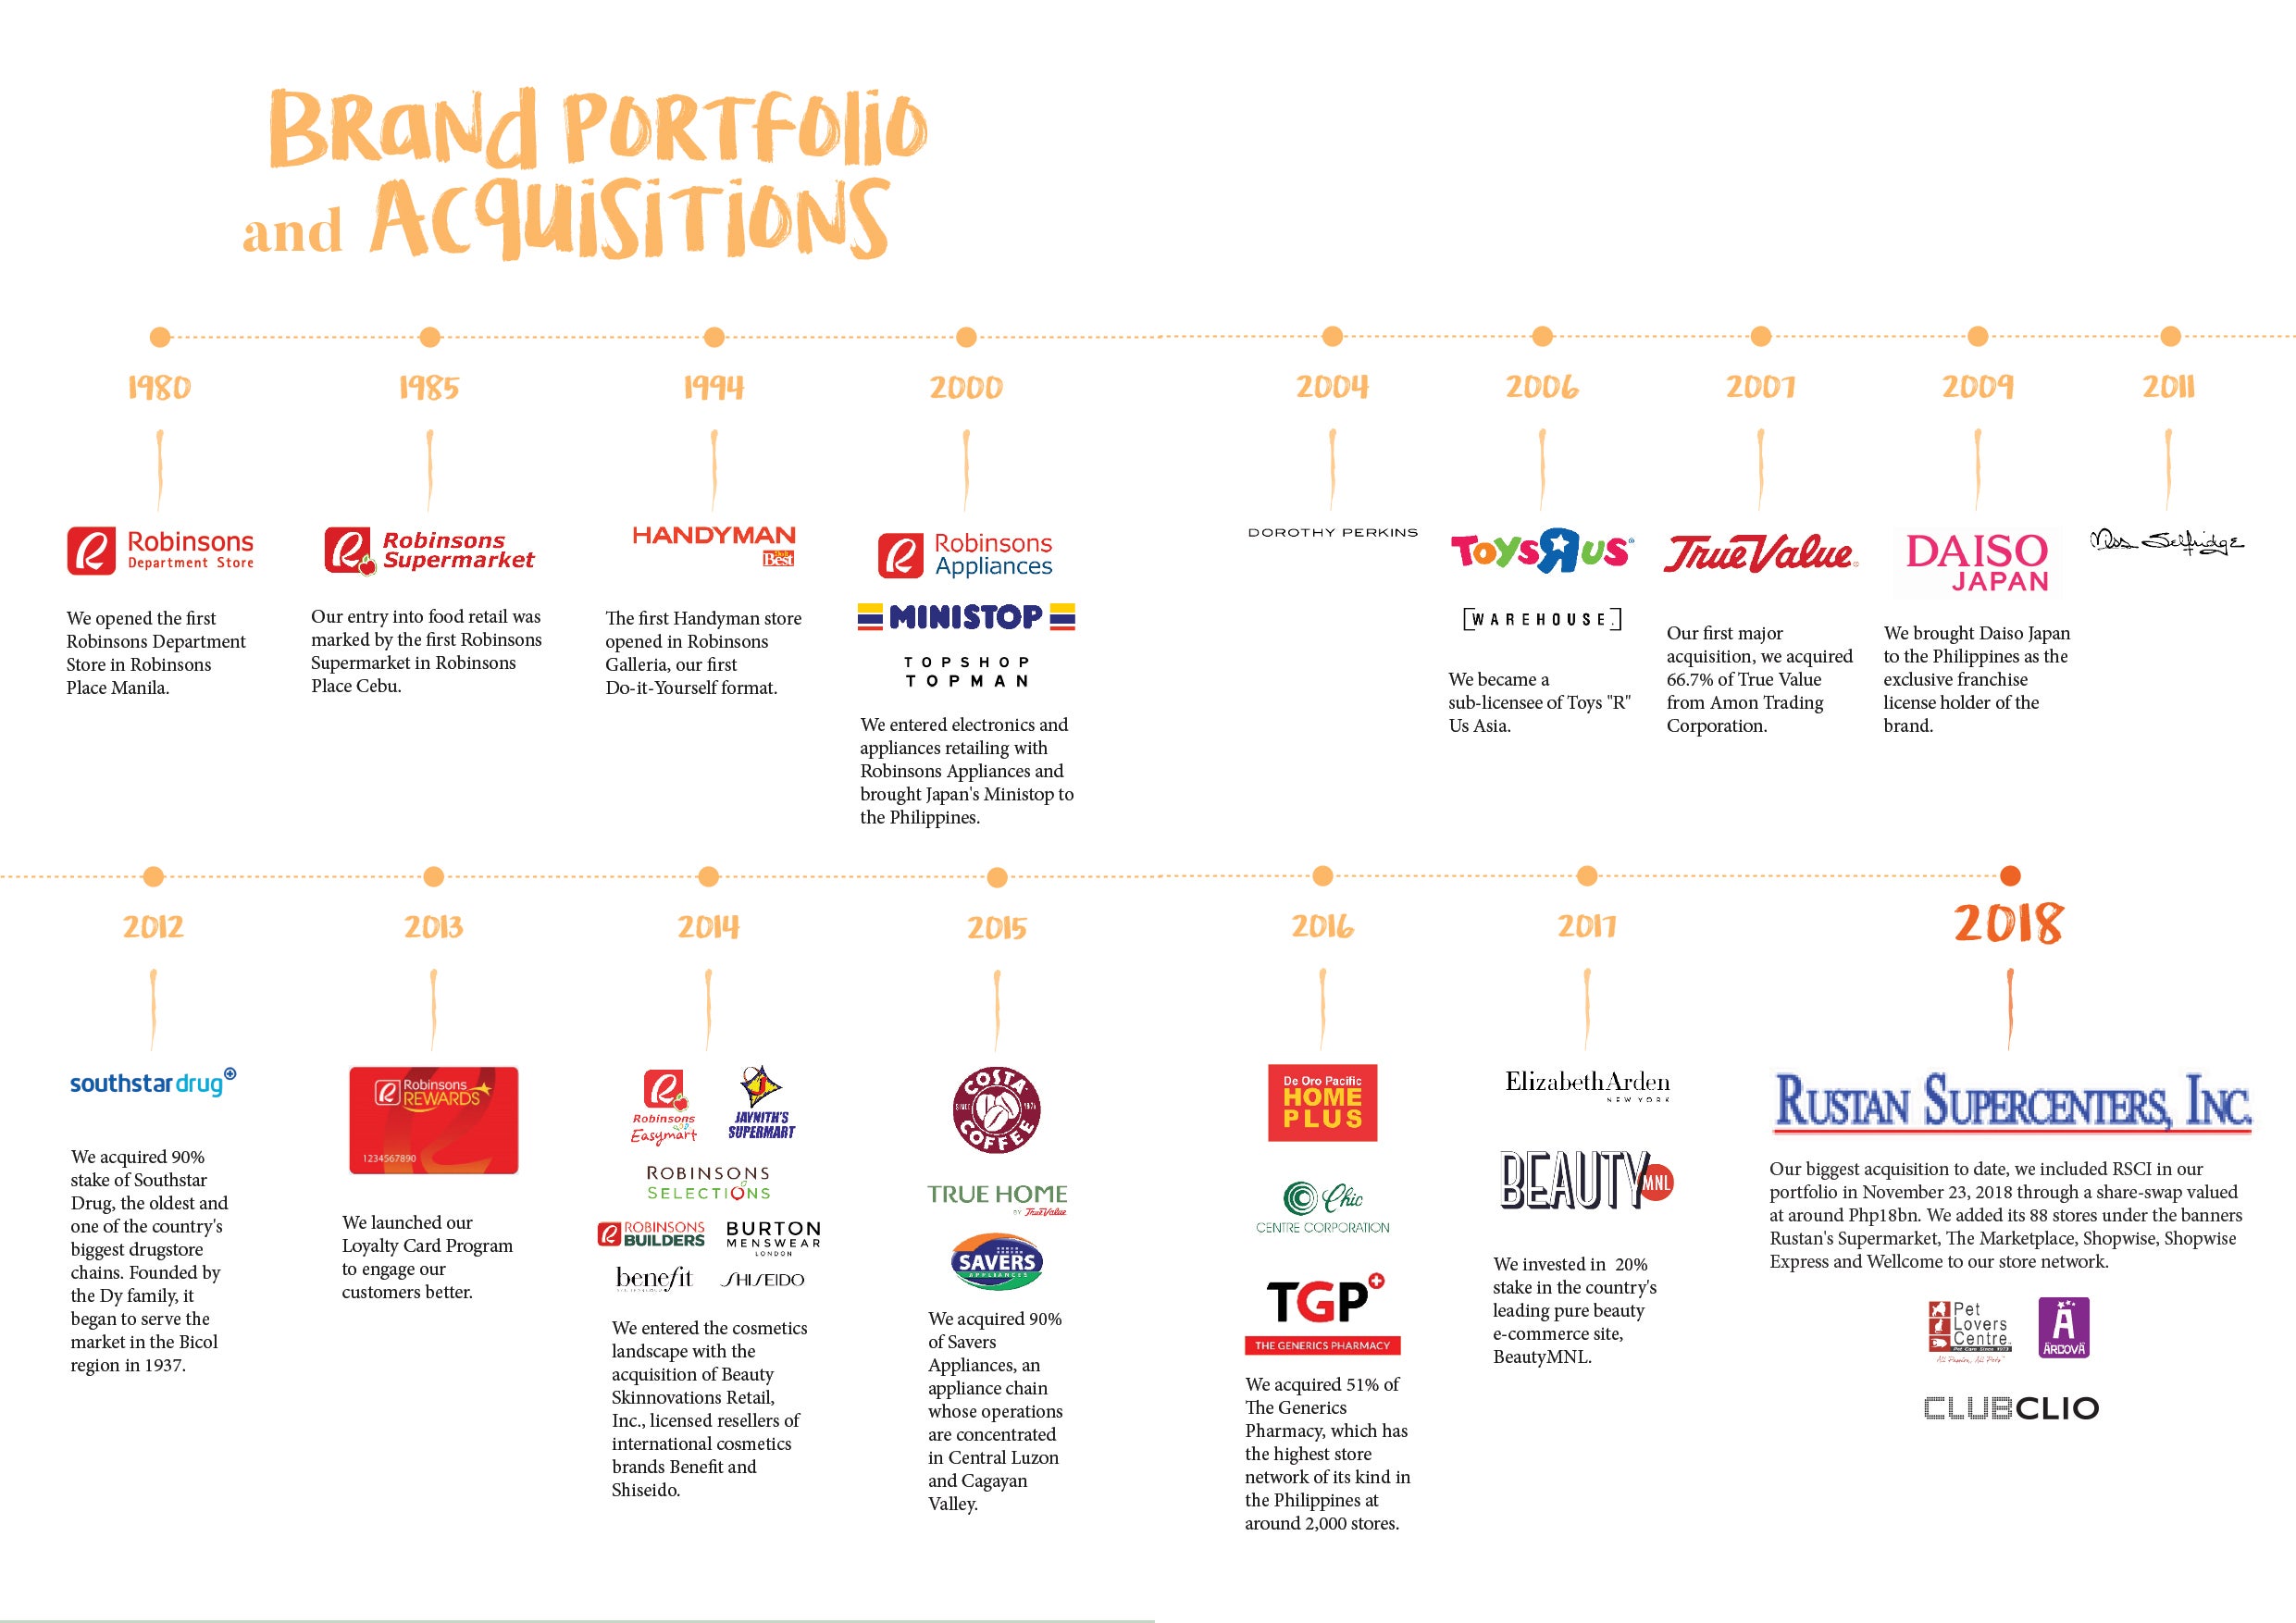 Brand Portfolio and Acquisition